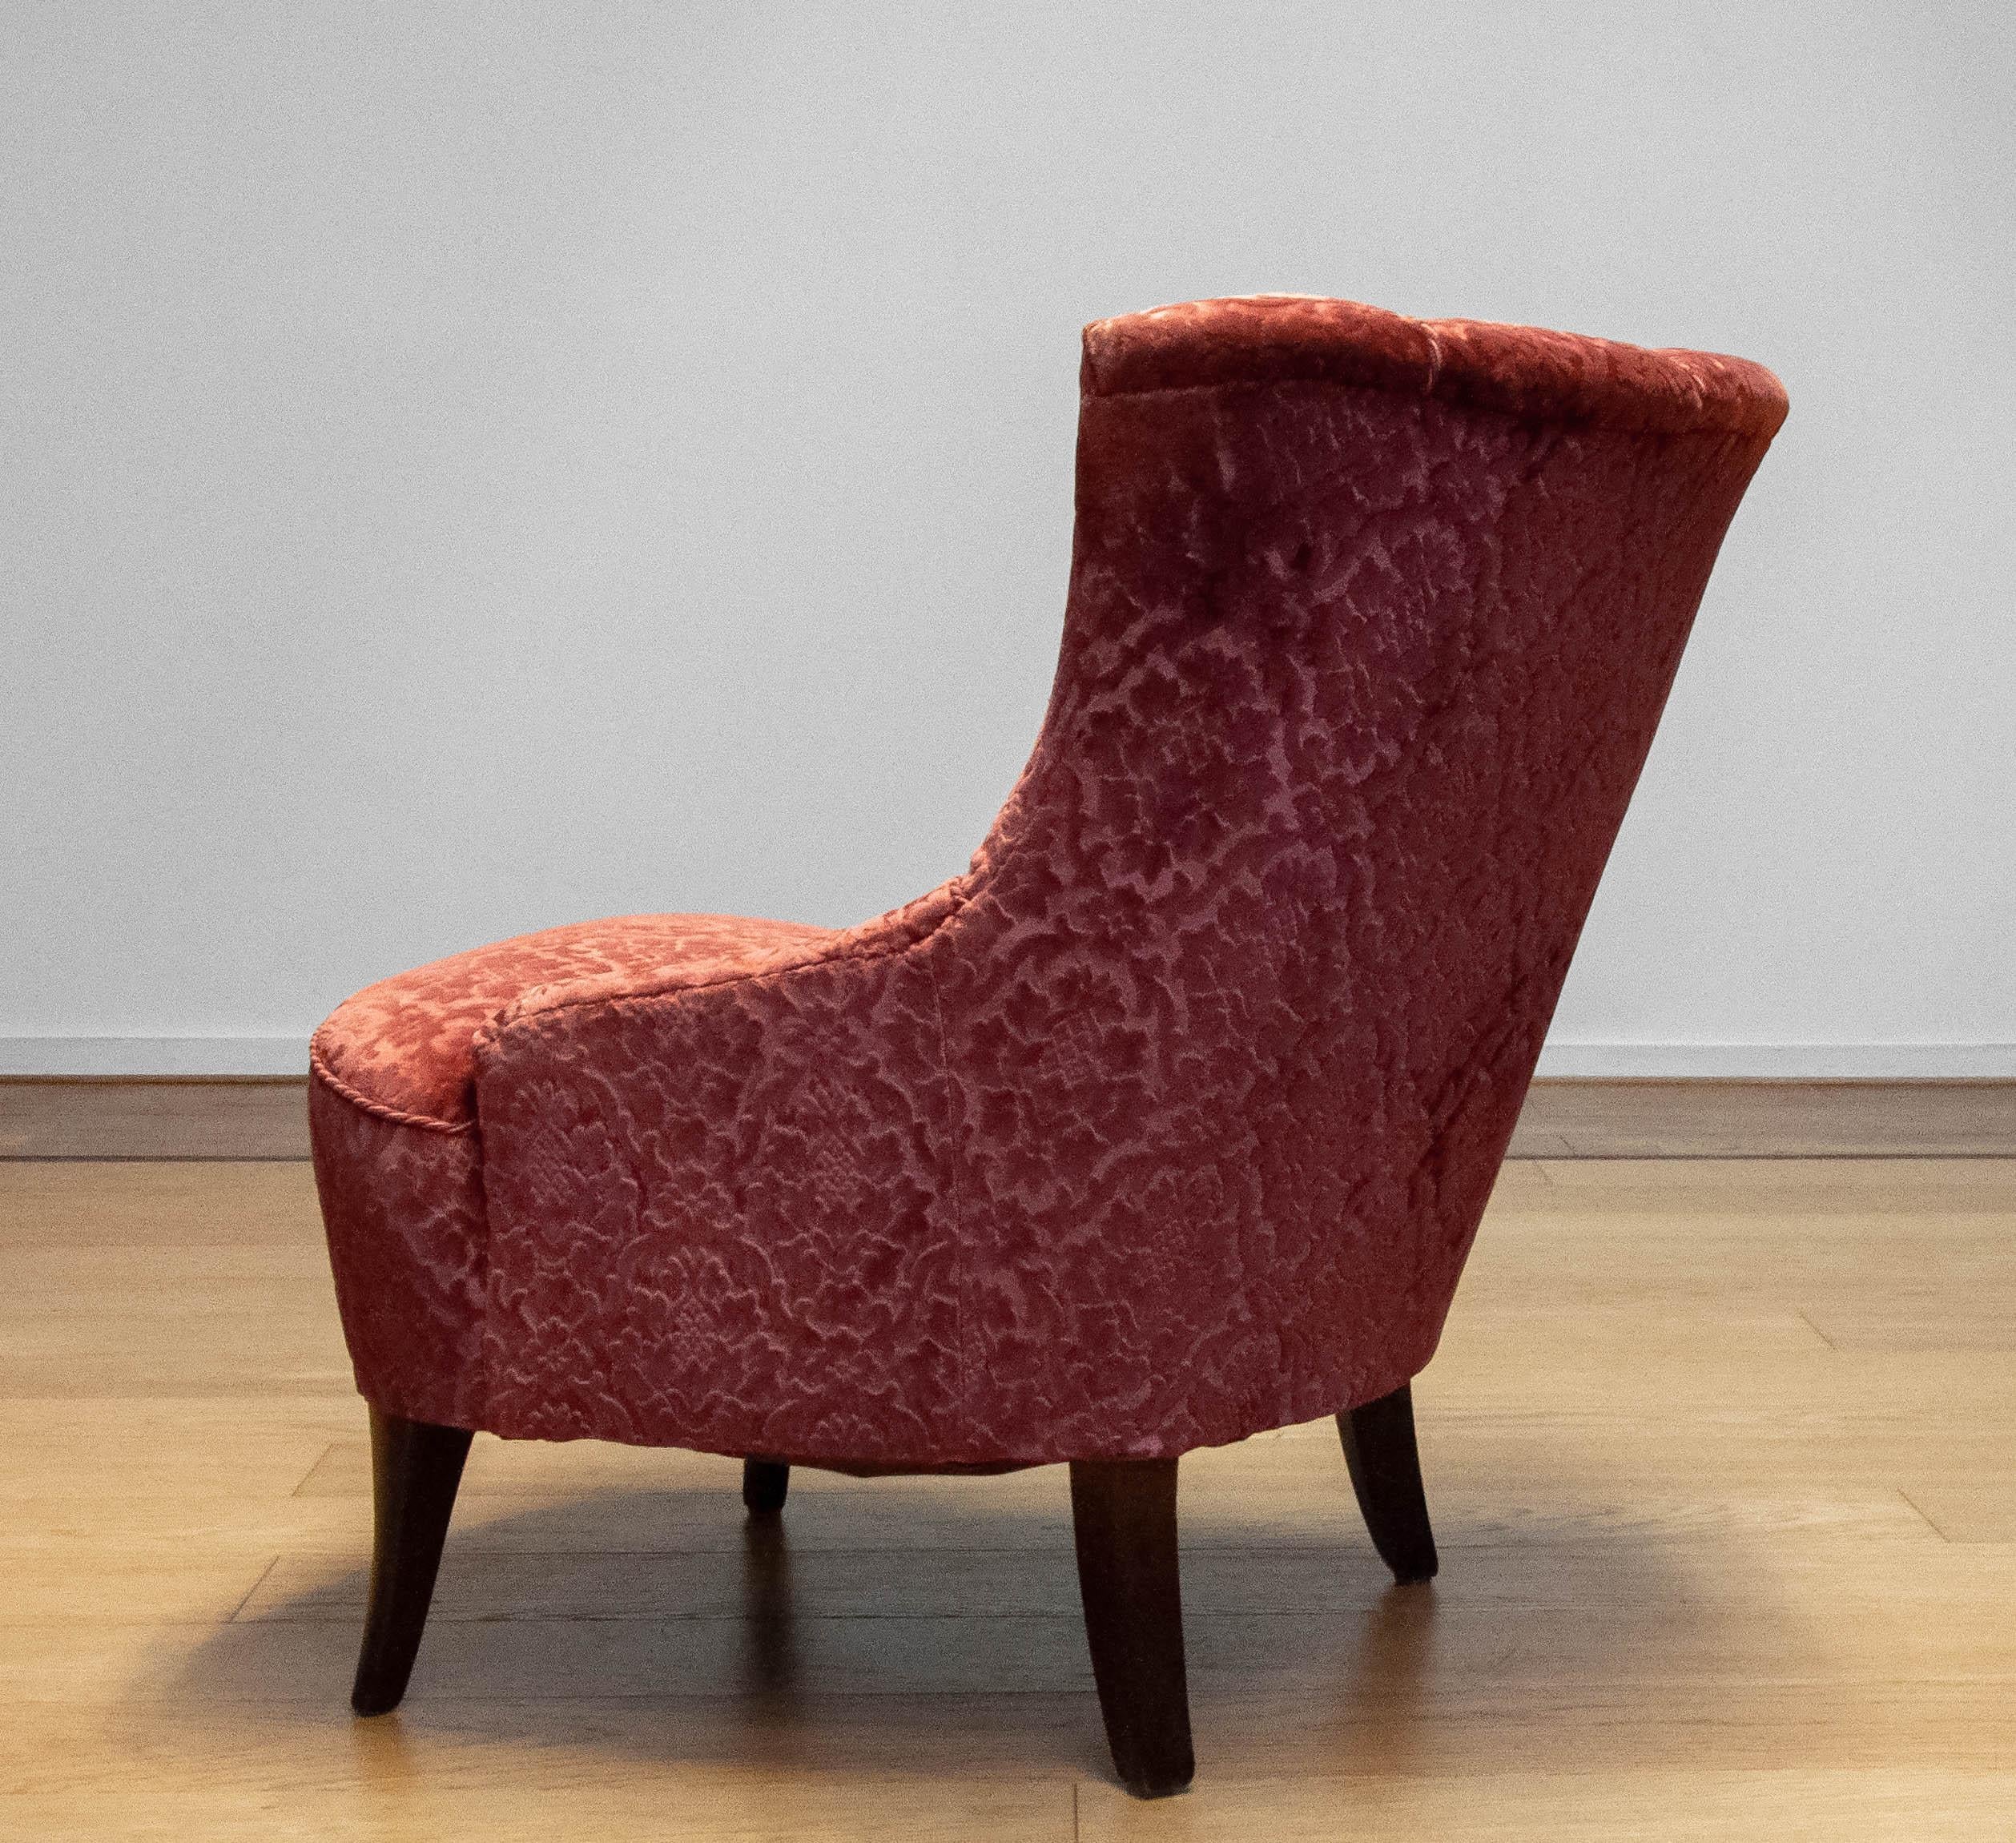 20th Century Napoleon III Slipper Chair In Brique Ton Sur Ton Jacquard Velvet In Good Condition For Sale In Silvolde, Gelderland